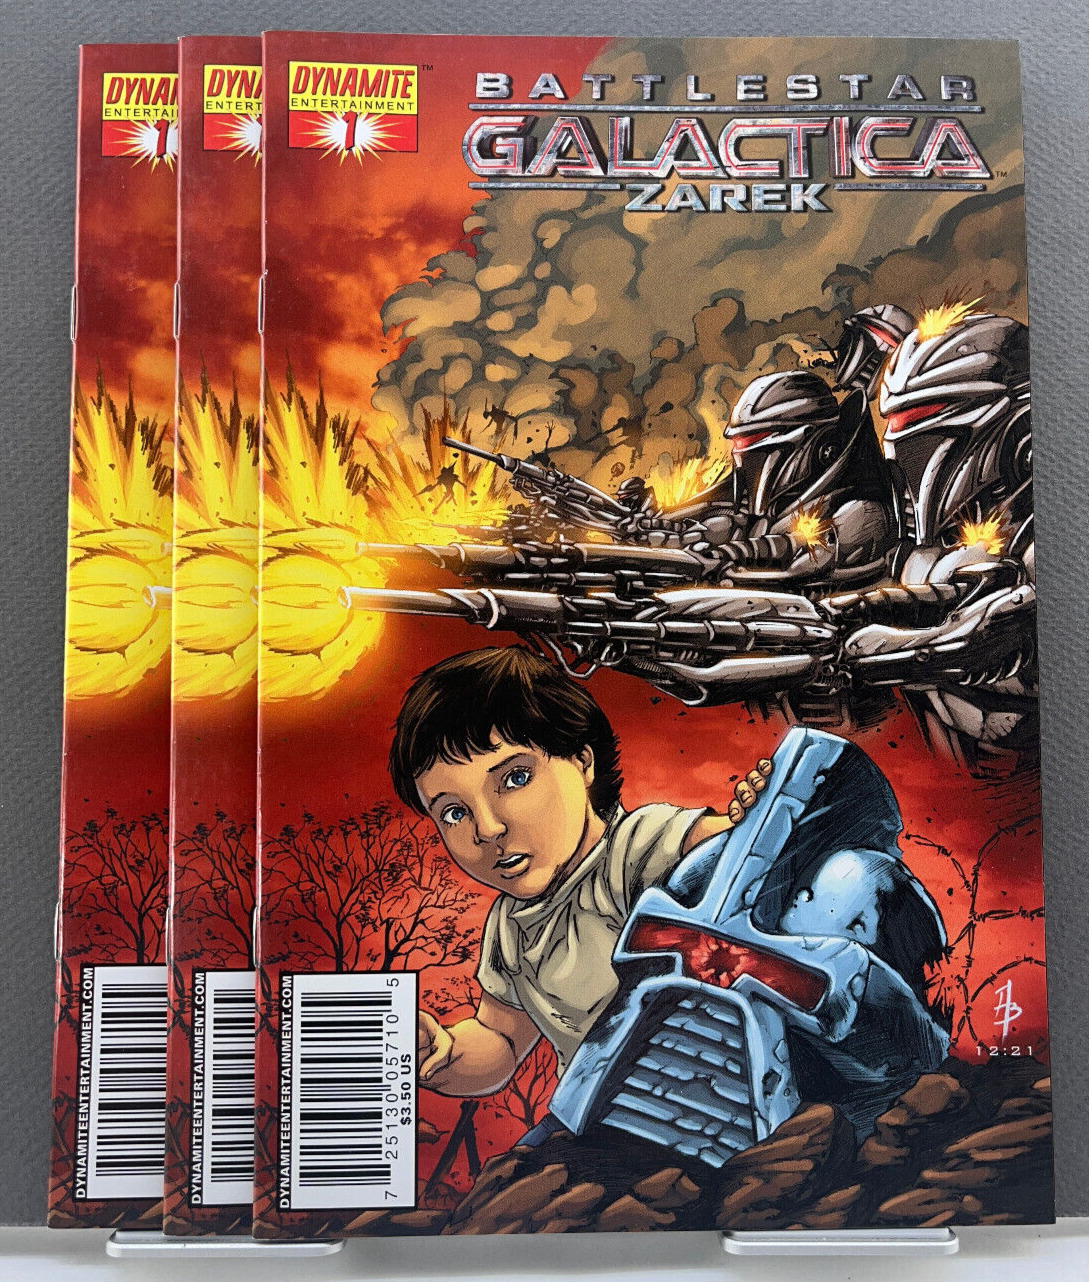 3 Copies Battlestar Galactica Zarek #1 Dynamite Entertainment 2007 8.5 Very Fine